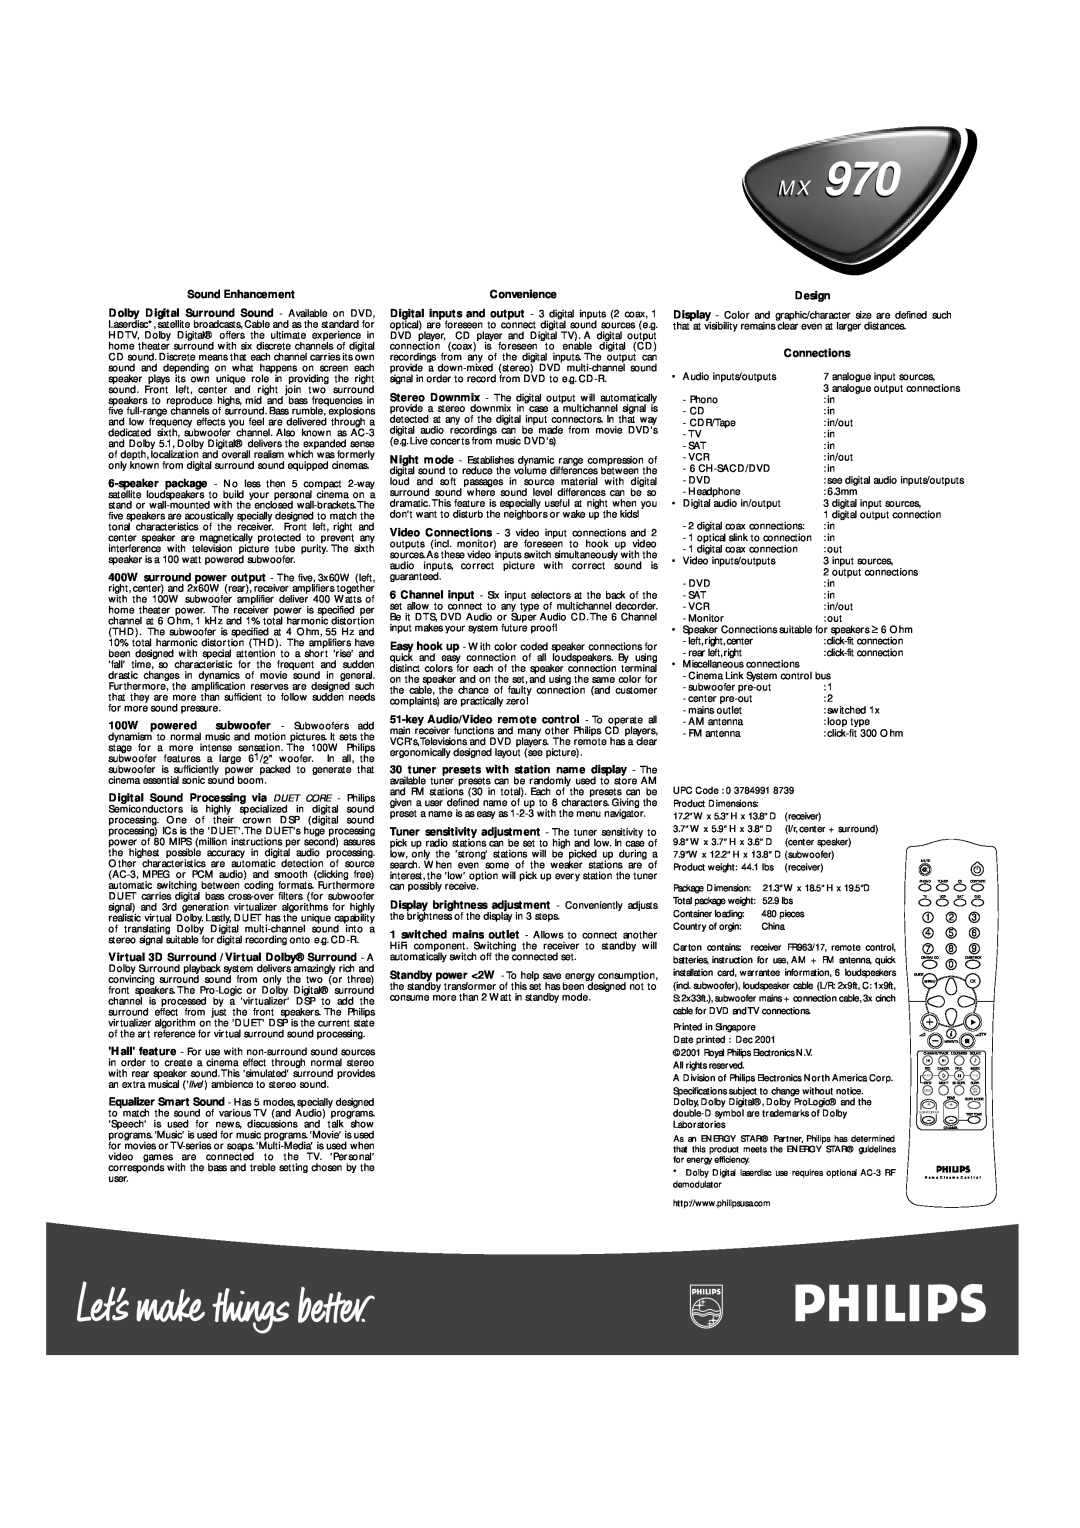 Philips MX970 manual 